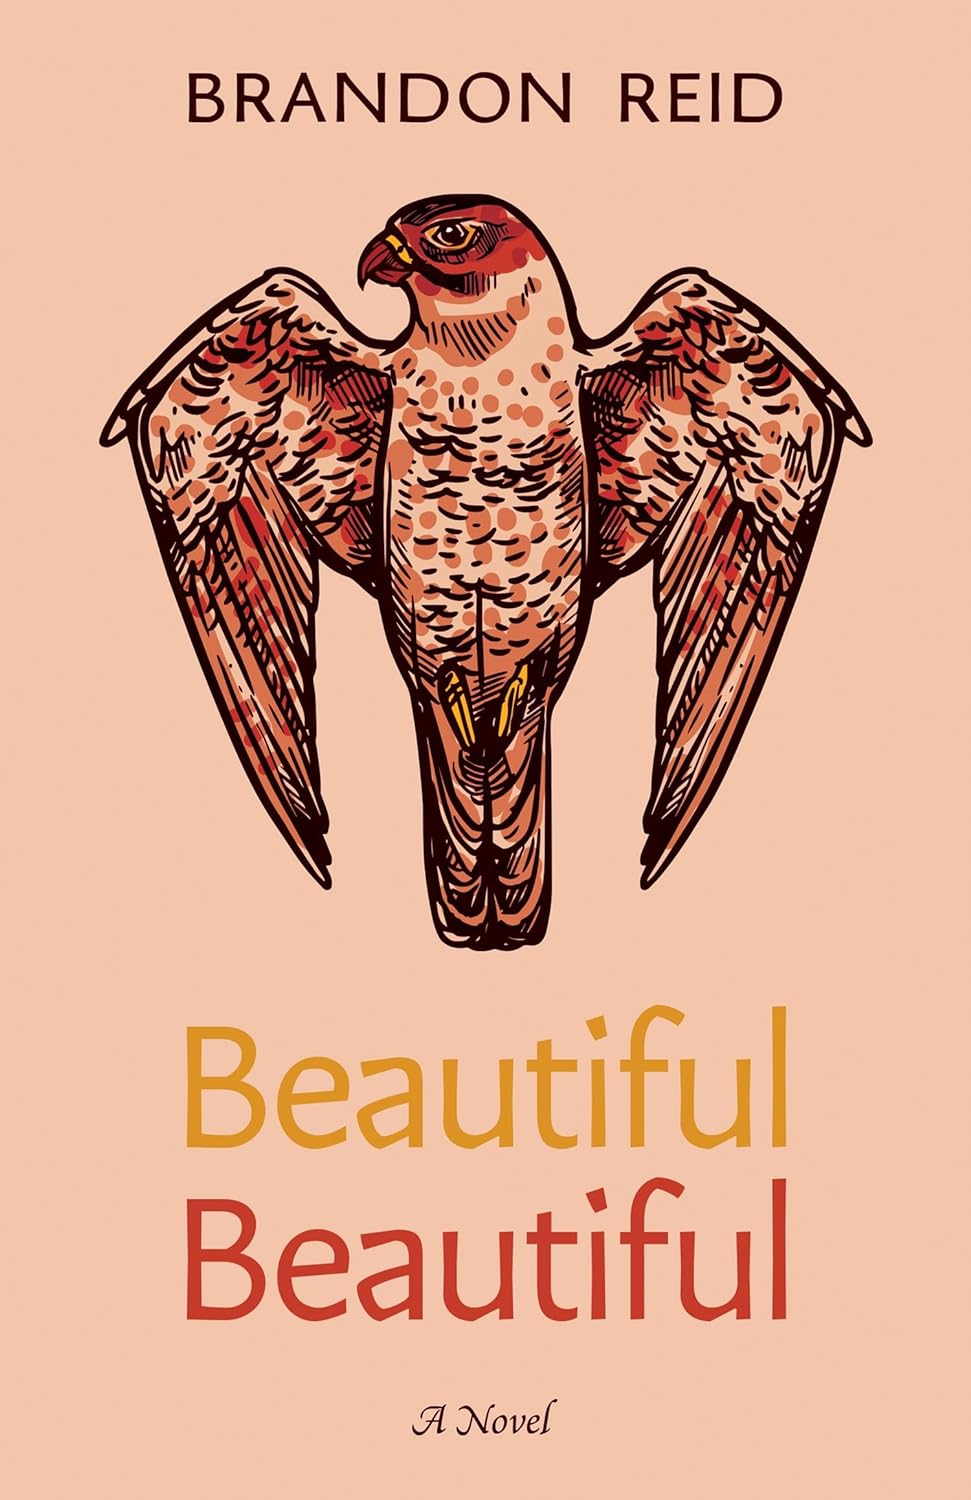 Beautiful Beautiful by Brandon Reid